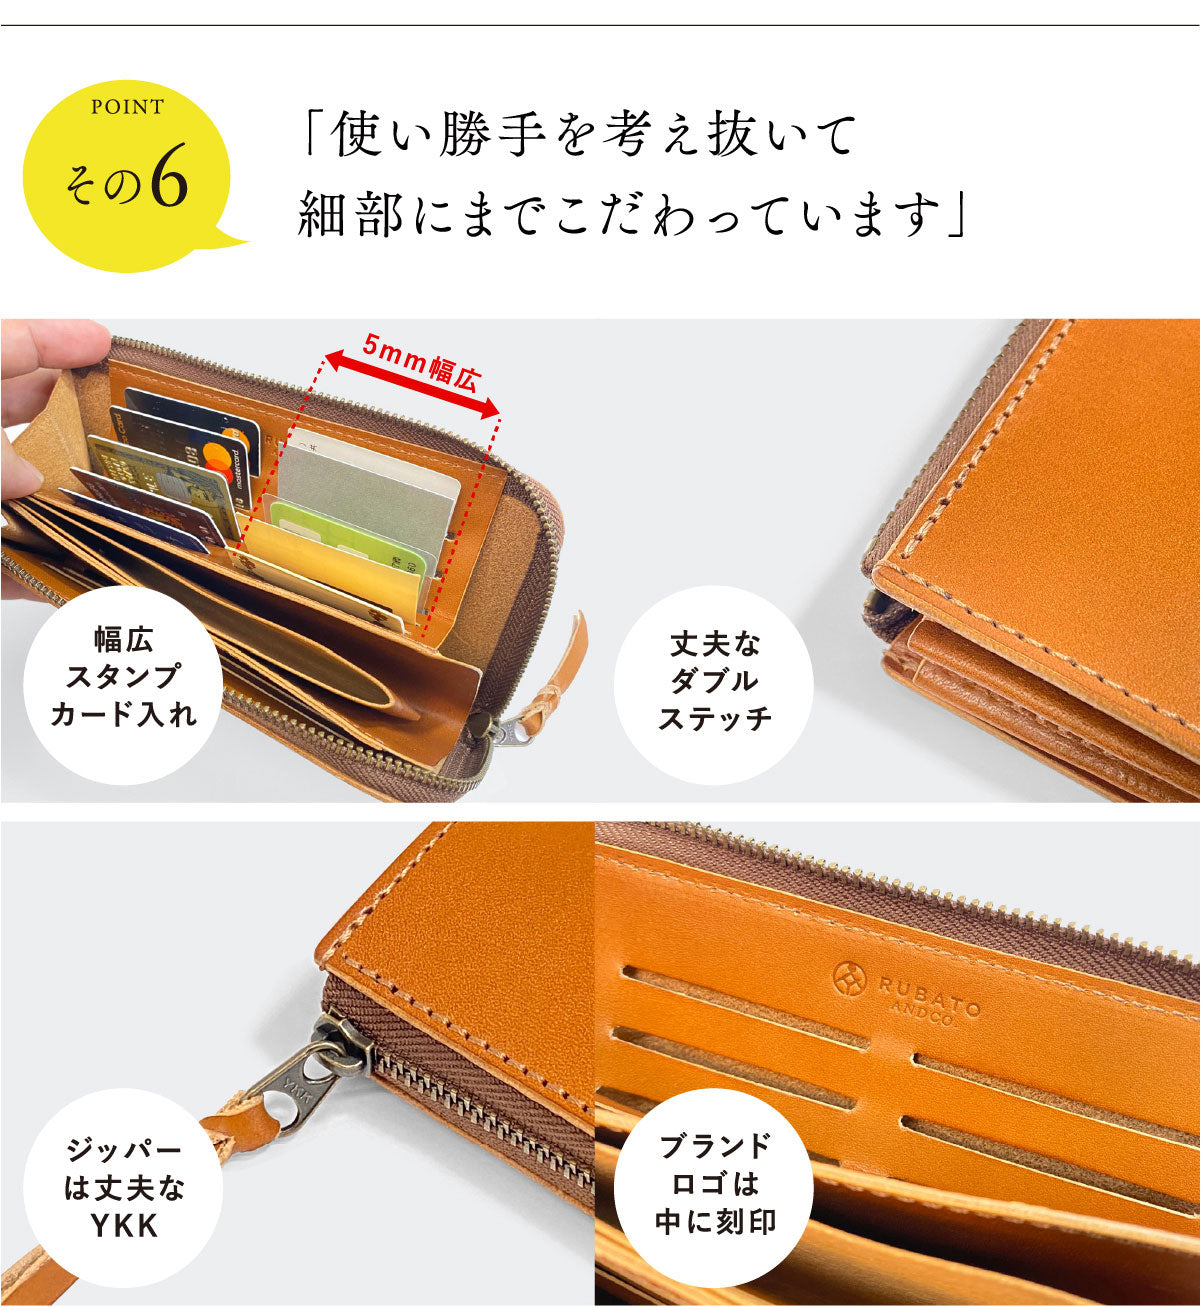 Smith "カードが立つ" 日本製 栃木レザー 長財布 ブラウン(2021年12月入荷) | 日本製 ハンドメイド 栃木レザー 長財布